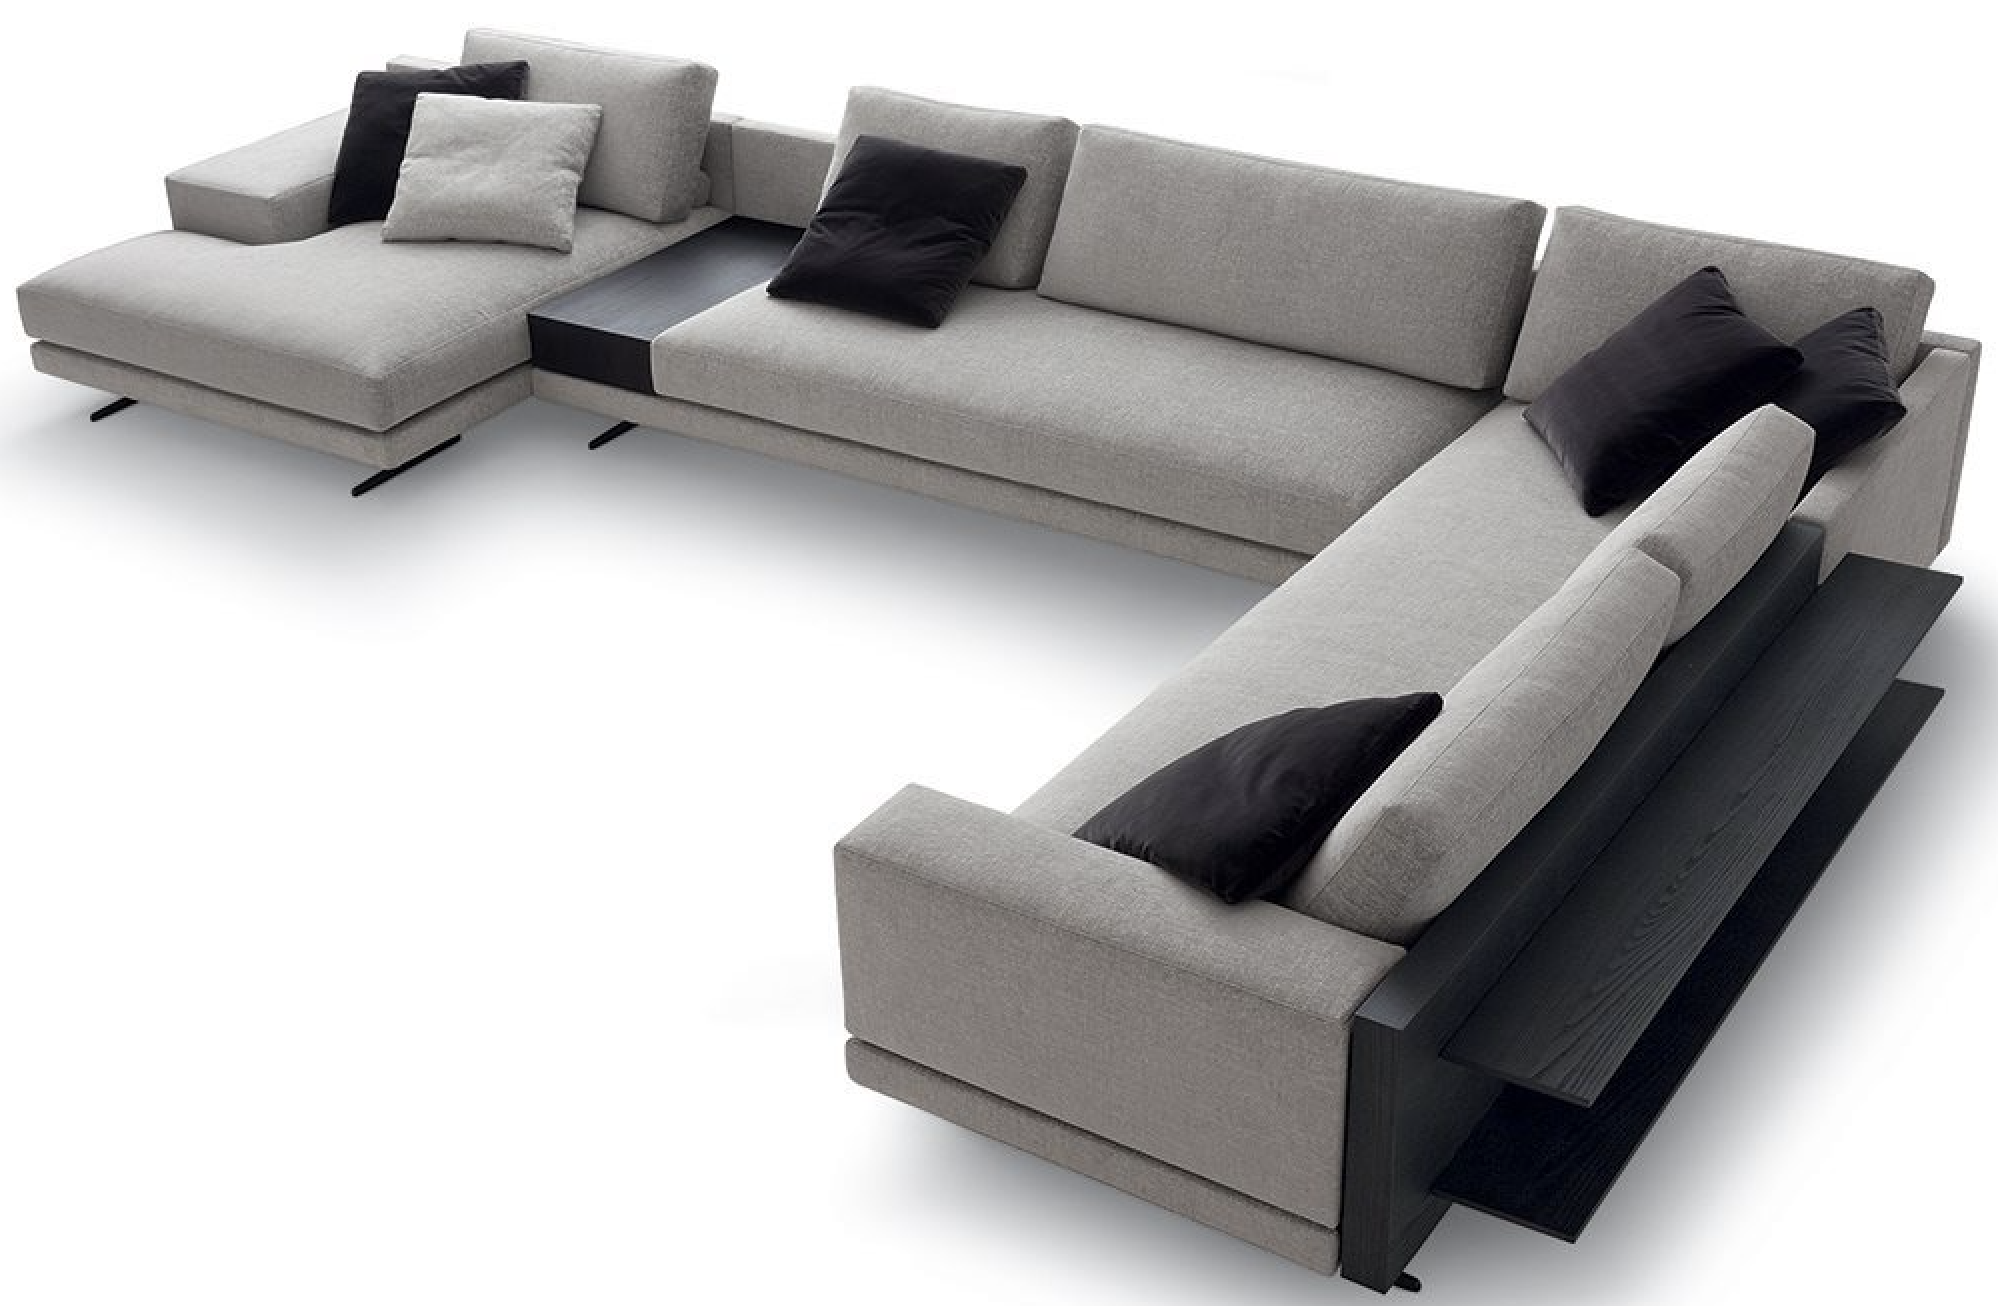 Product Image Mondrian sofa